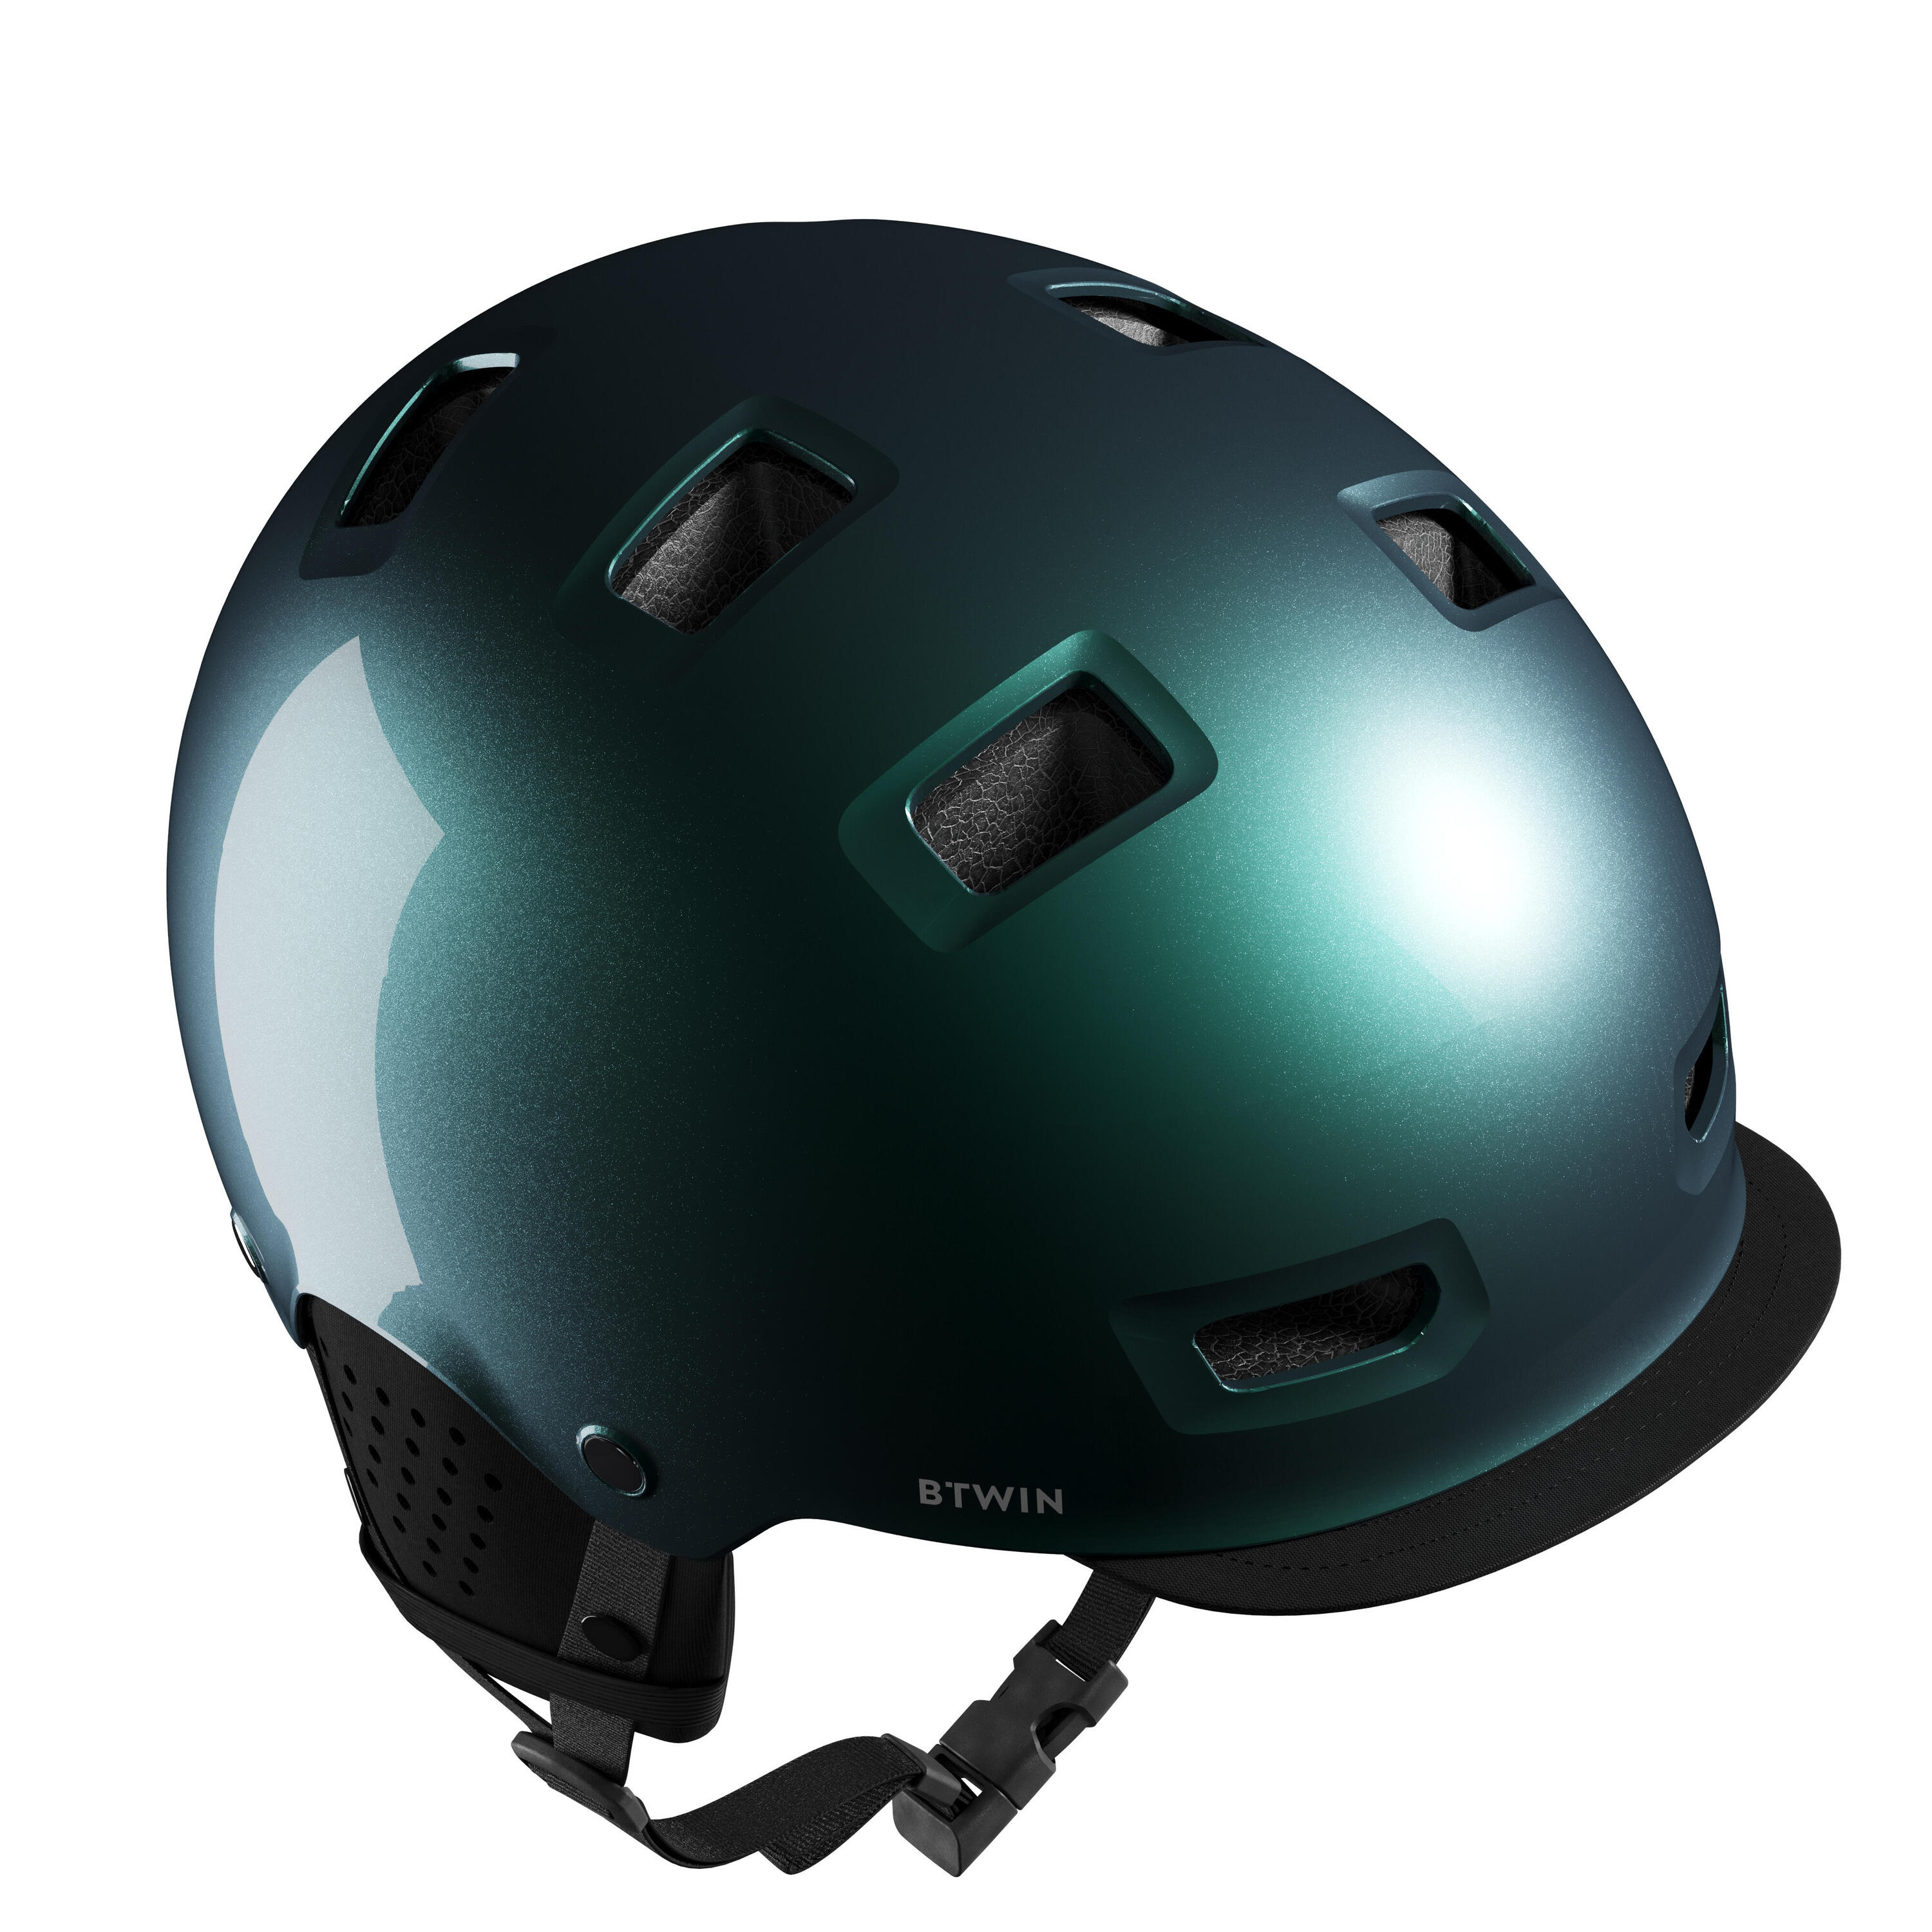 BTWIN 500 City Cycling Bowl Helmet - Petrol Blue